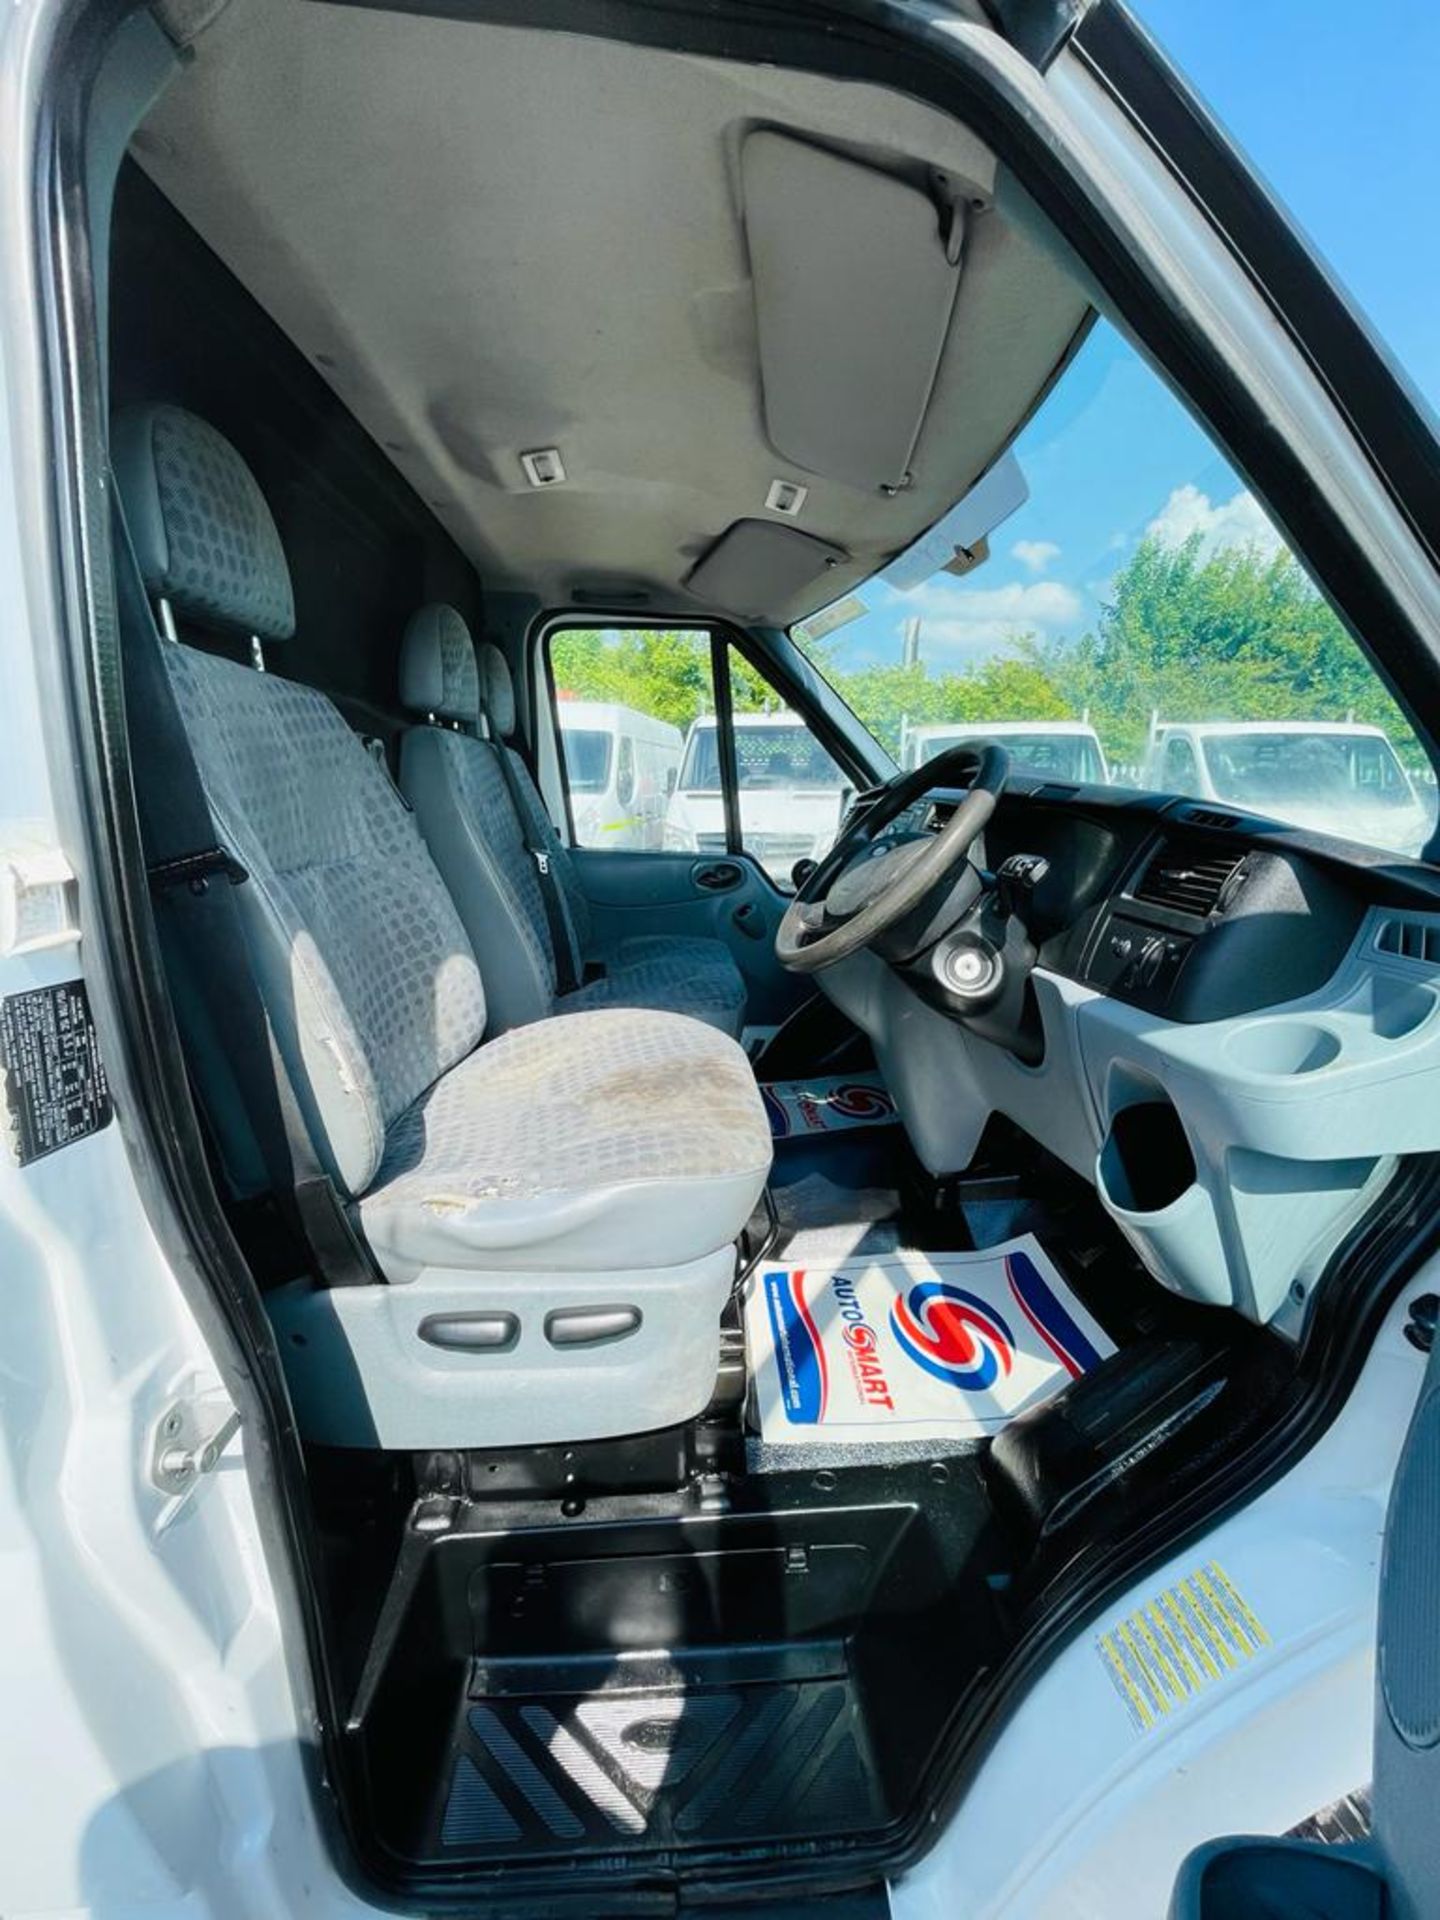 ** ON SALE ** Ford Transit 2.2 TDCI L1 H1 2012 ‘12 Reg’ Short wheel base - Panel Van - Image 18 of 24